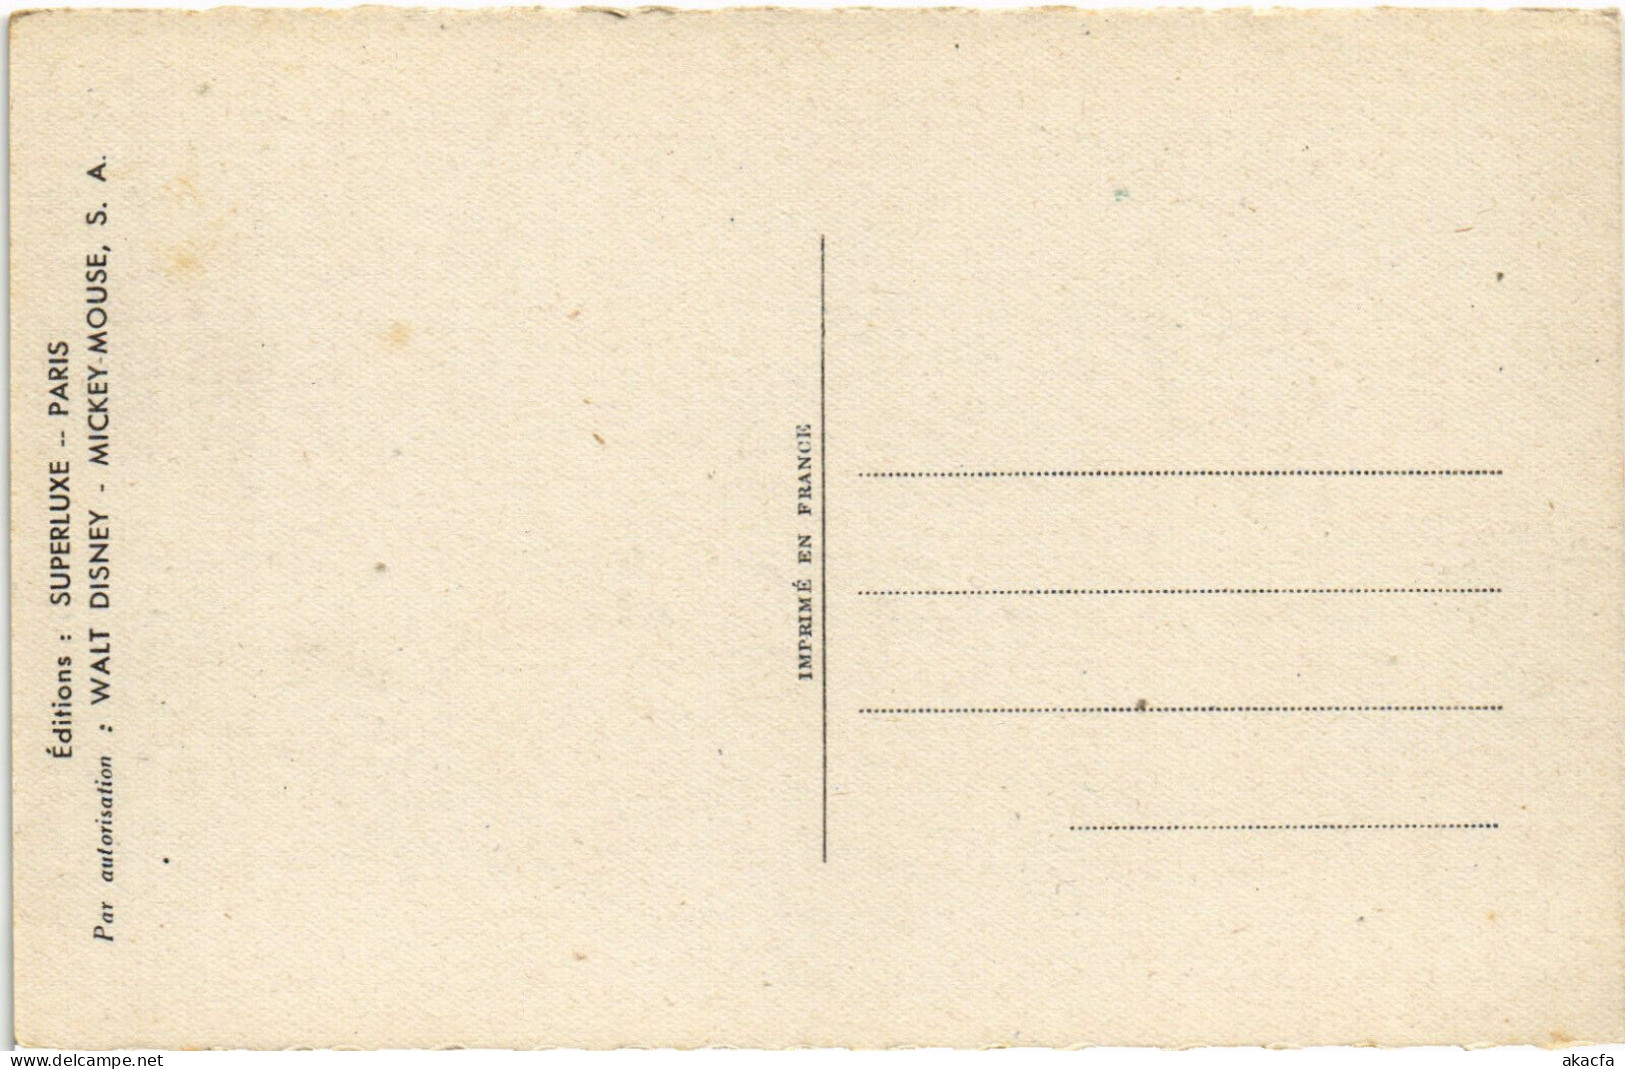 PC DISNEY, SNOW WHITE, LE SOIR AU COIN DU FEU, Vintage Postcard (b52837) - Disneyworld